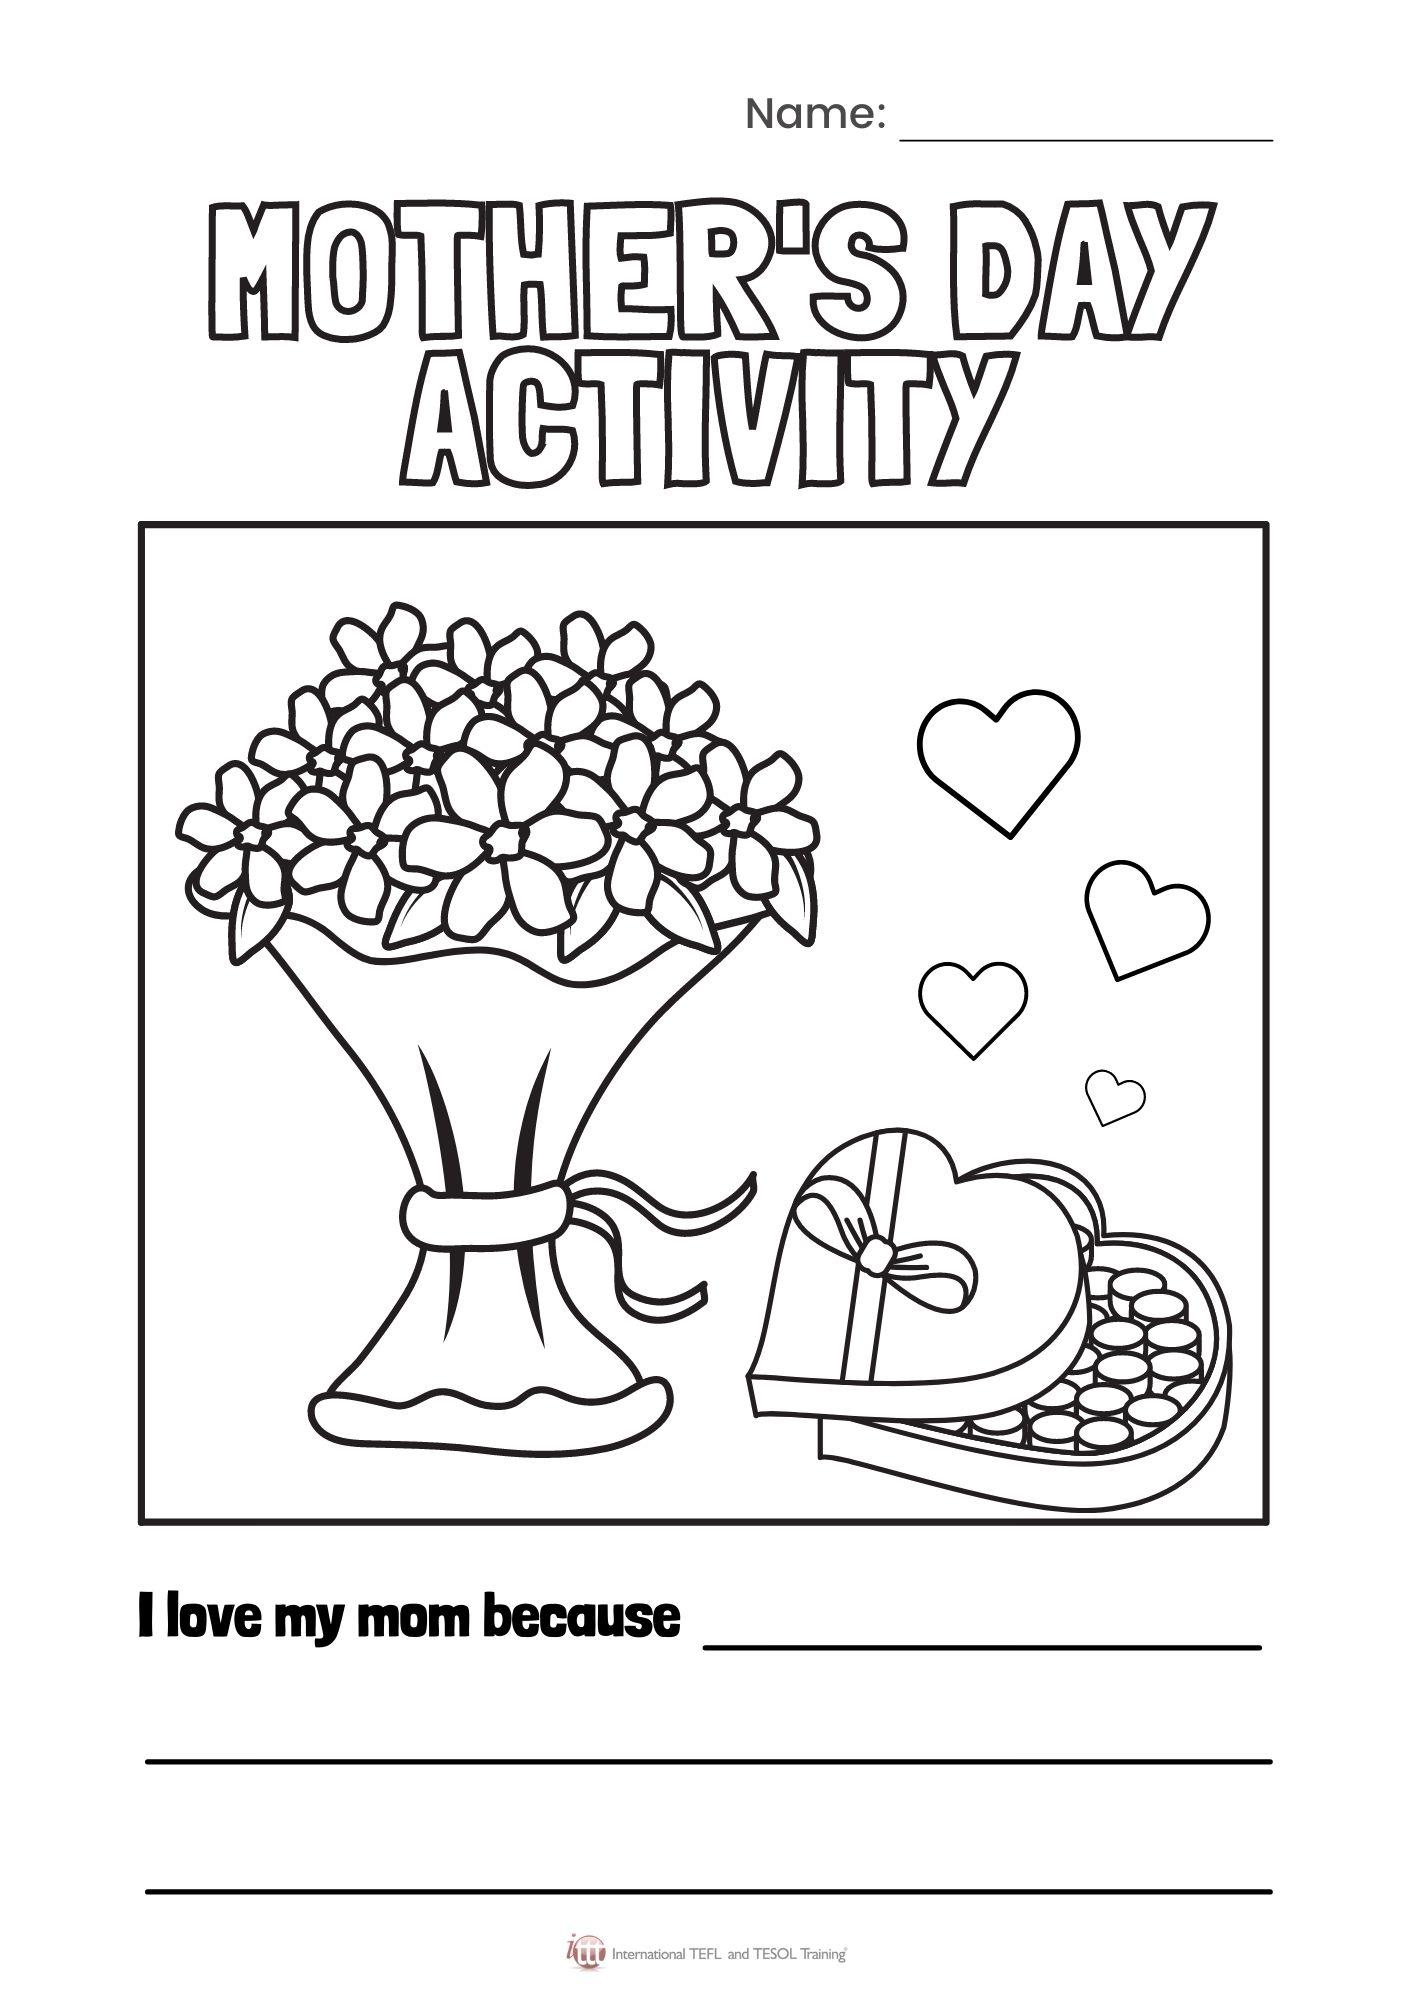 Grammar Corner Mother's Day Activity - I love my mom because